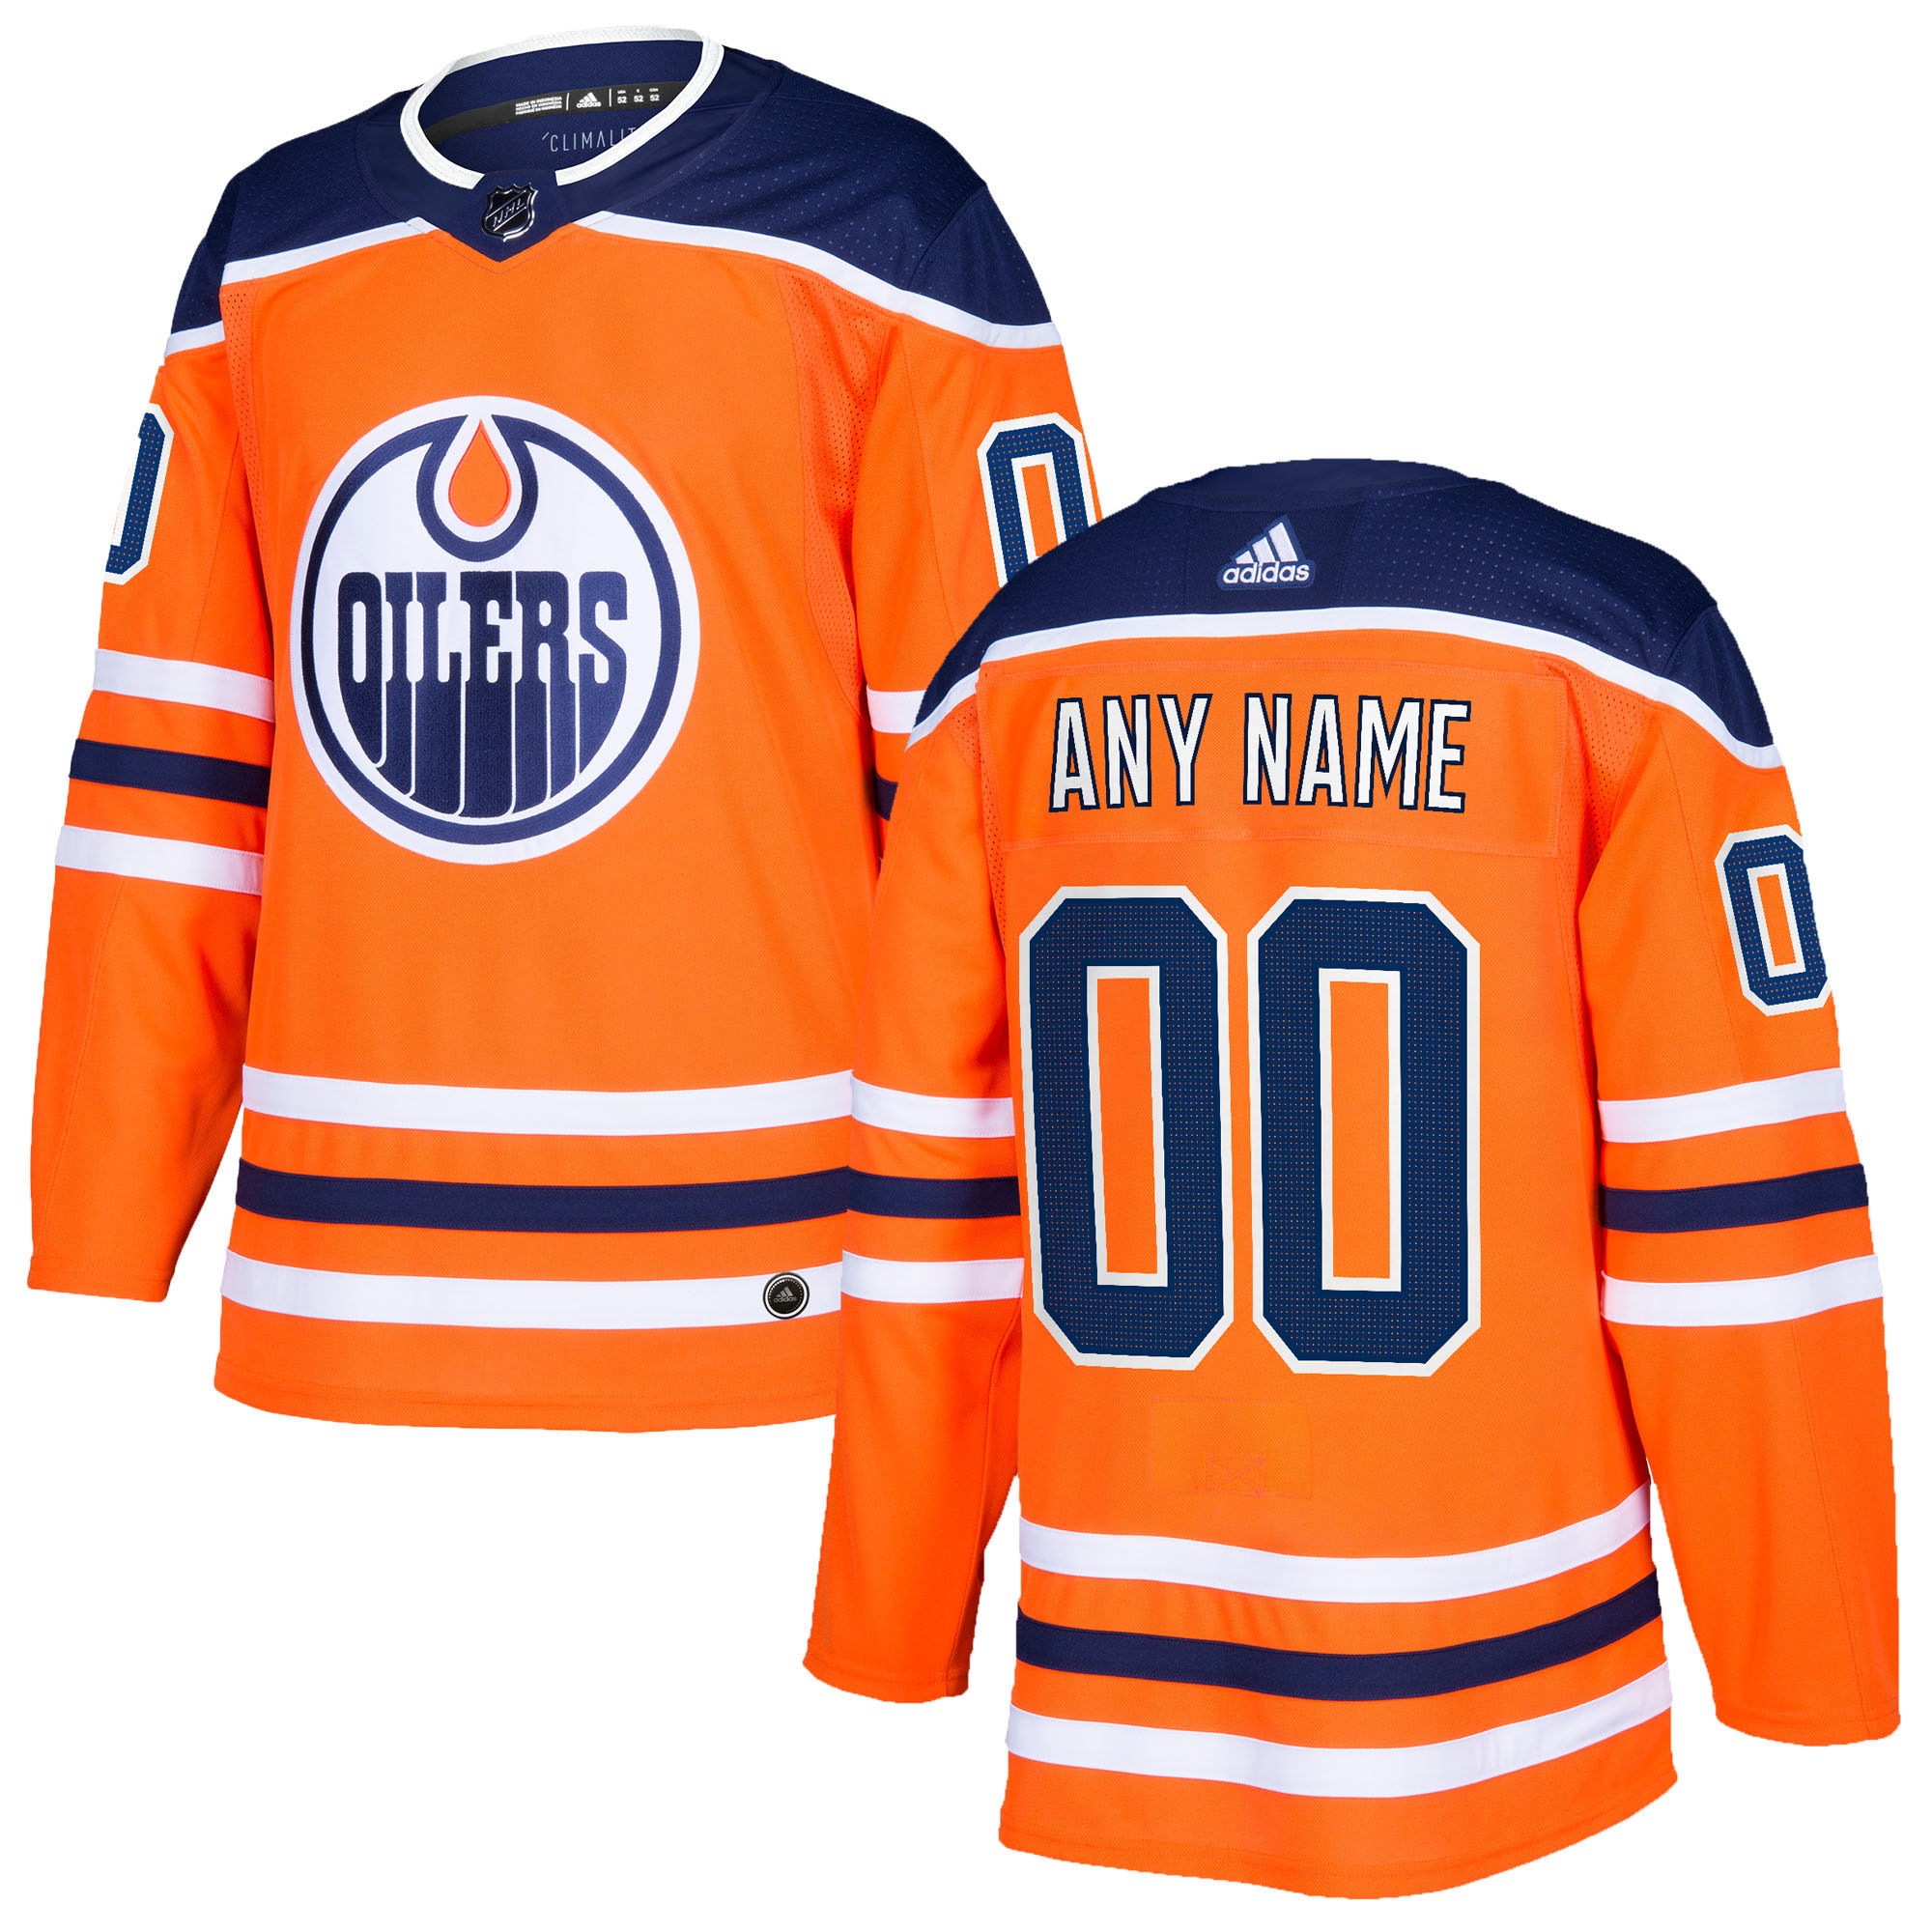 Custom Men's Adidas Edmonton Oilers Orange Home Authentic Stitched NHL Jersey